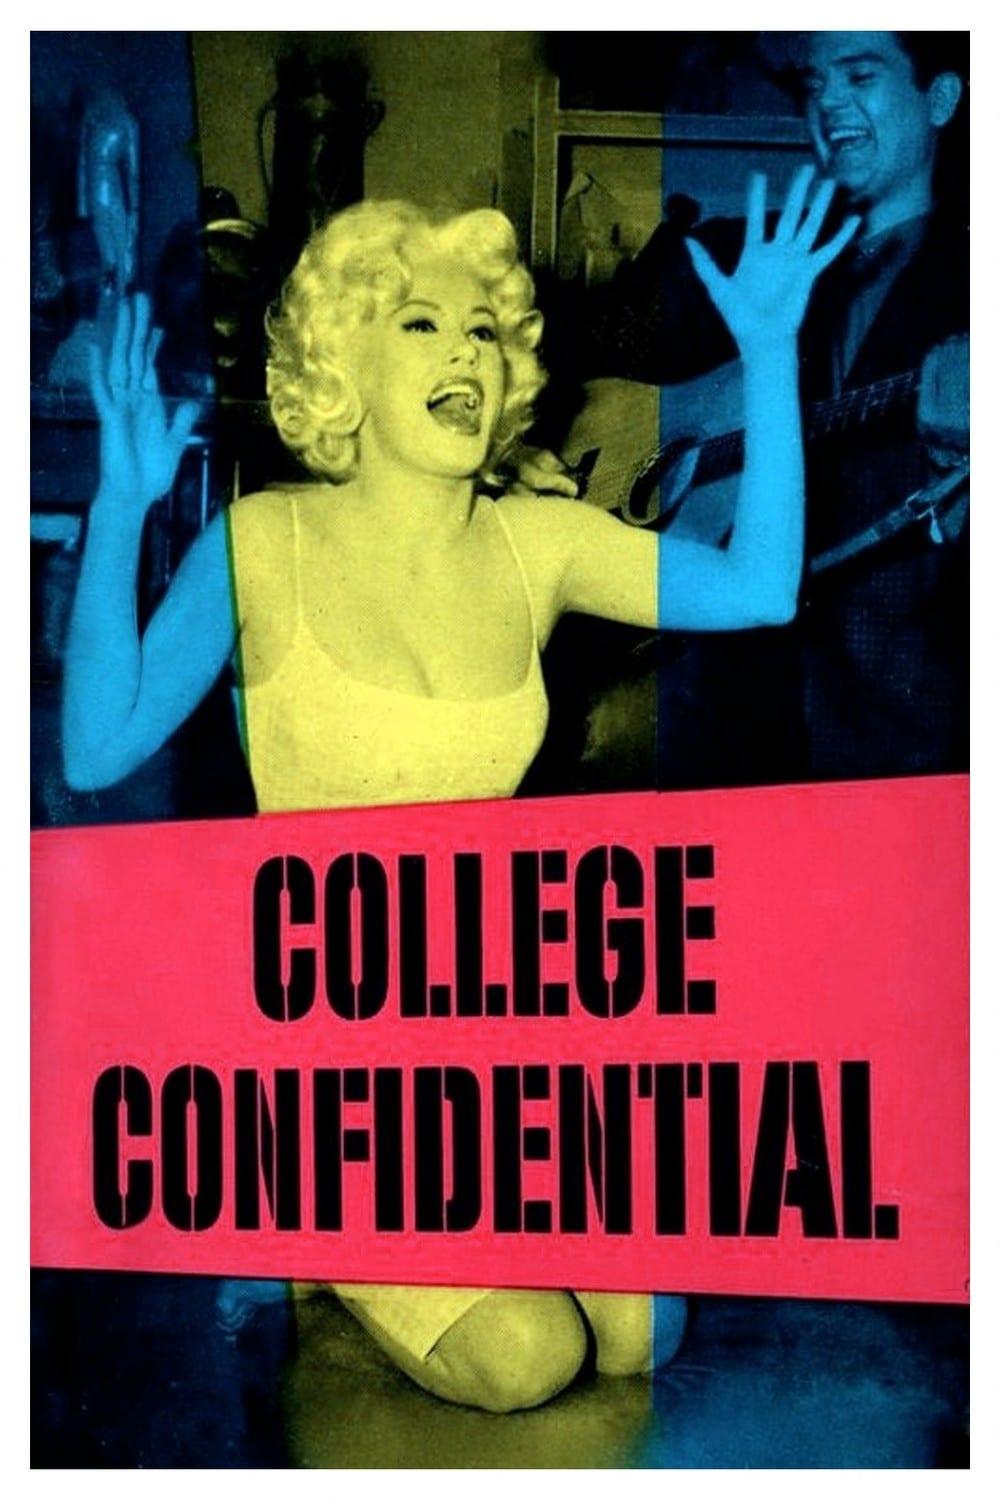 College Confidential poster